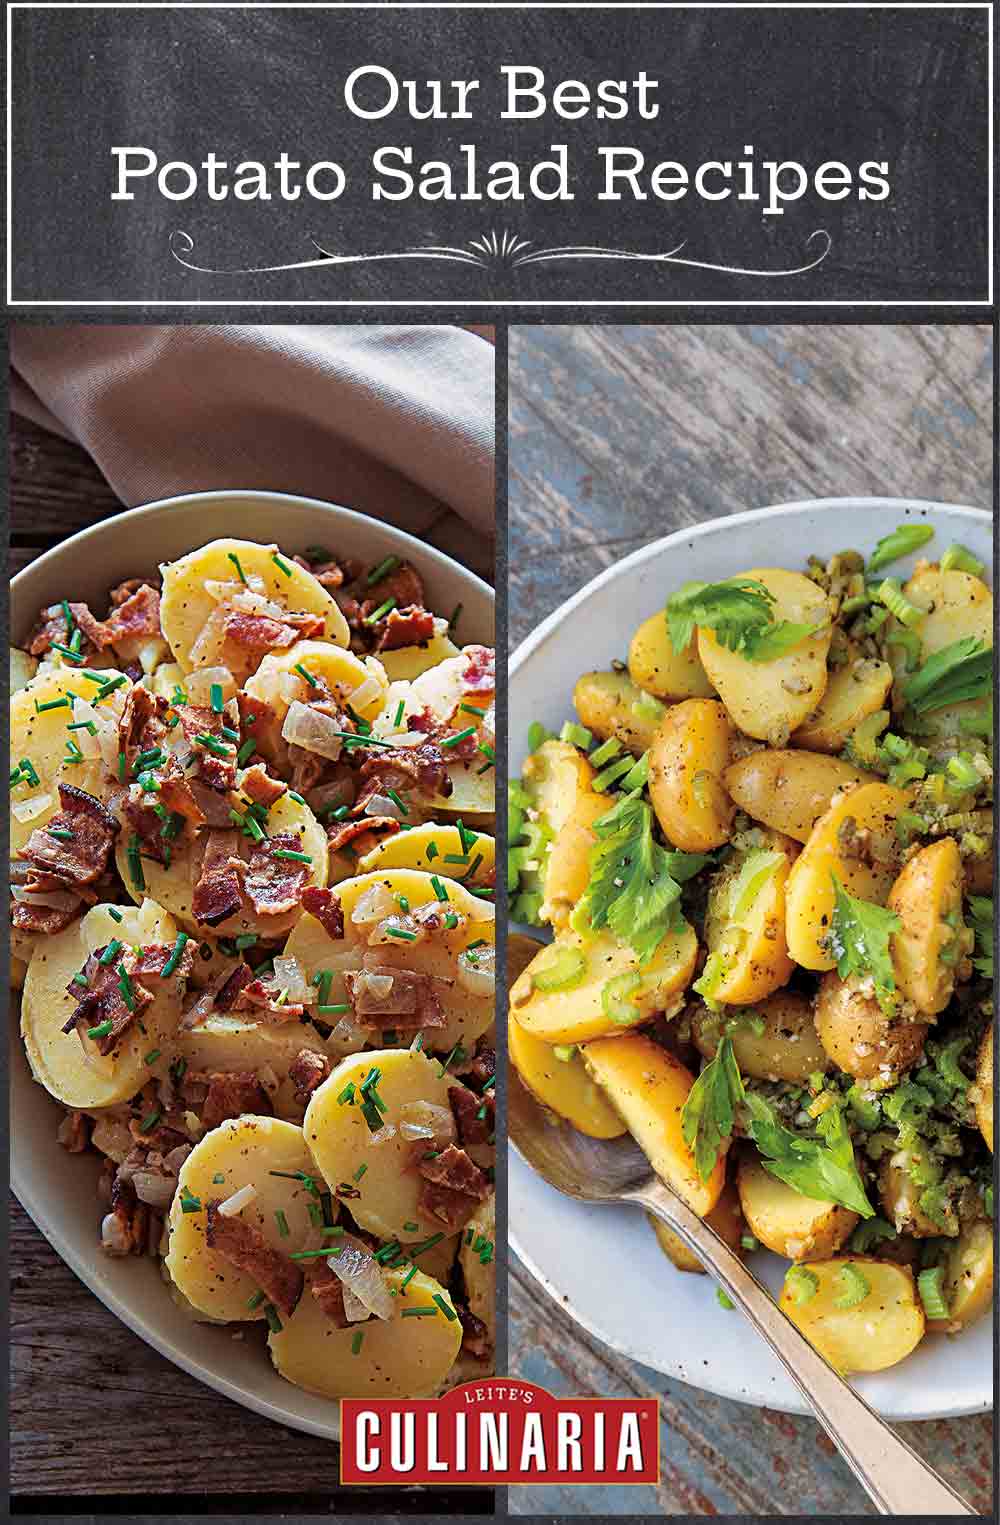 Images of 2 potato salad recipes -- German potato salad and mustardy potatoes with celery.